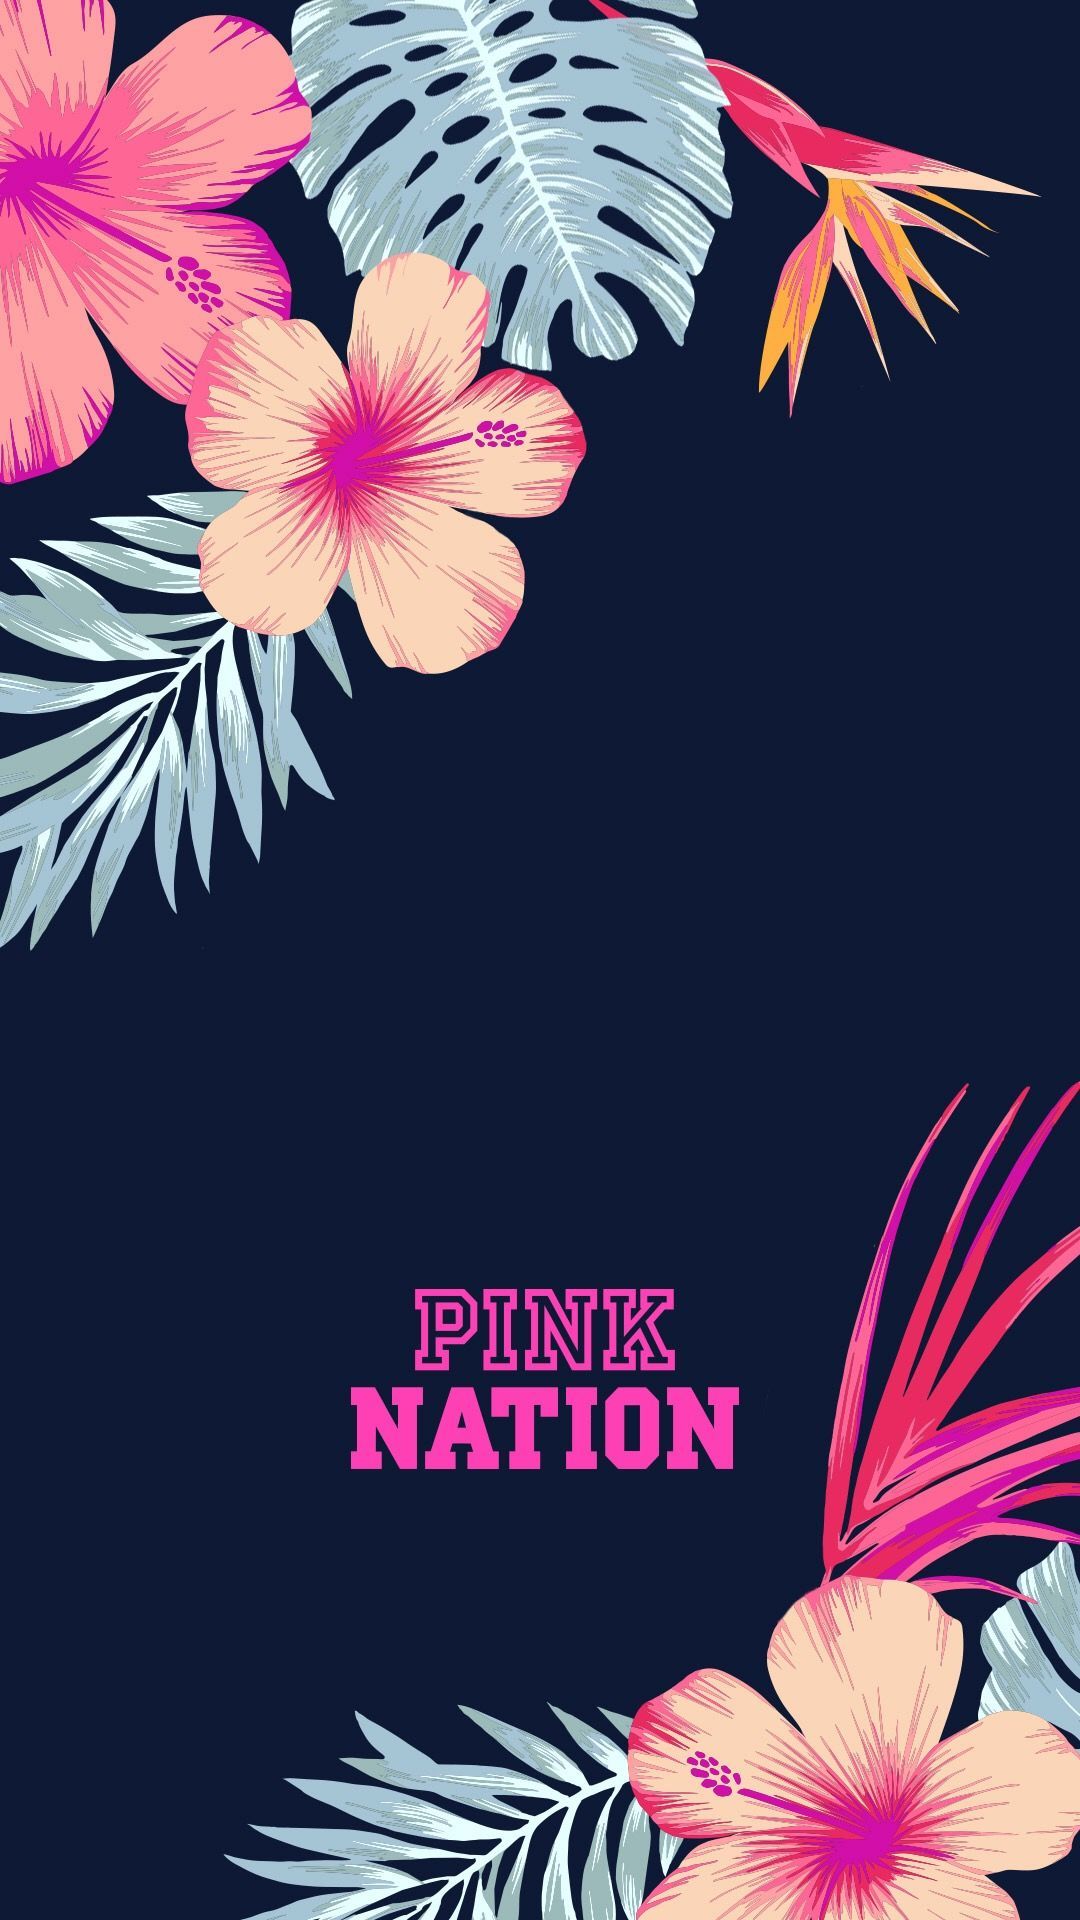 VS Pink iPhone Wallpaper. Pink nation wallpaper, Vs pink wallpaper, Victoria secret pink wallpaper